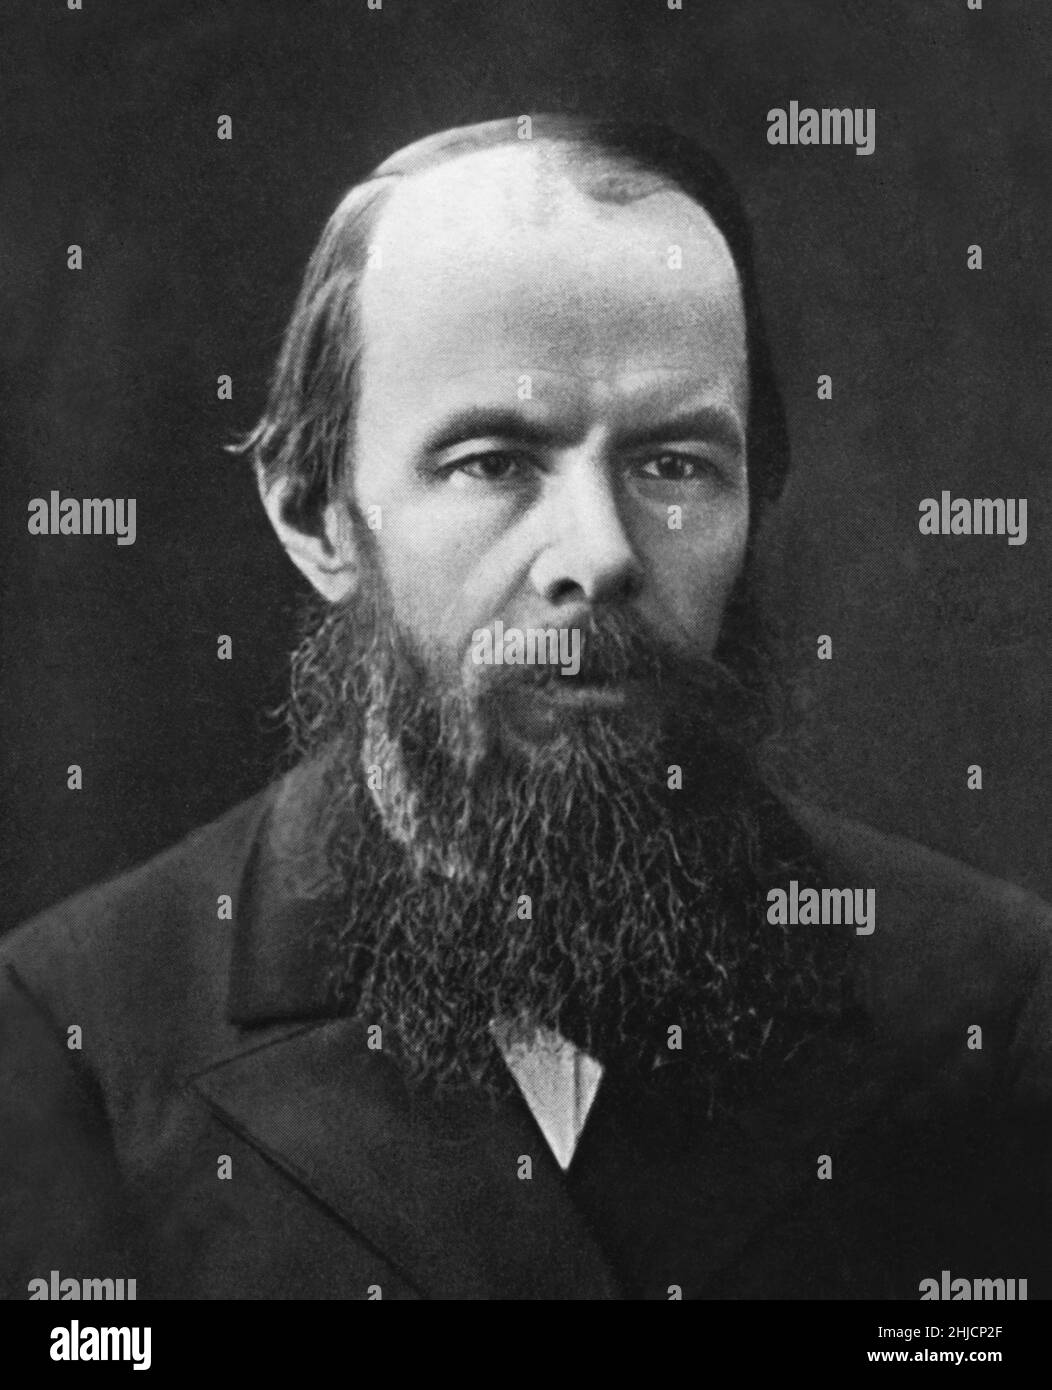 Fyodor Mikhailovich Dostoevsky (November 11, 1821 - February 9. 1881) was a Russian novelist, philosopher, short story writer, essayist, and journalist. Stock Photo